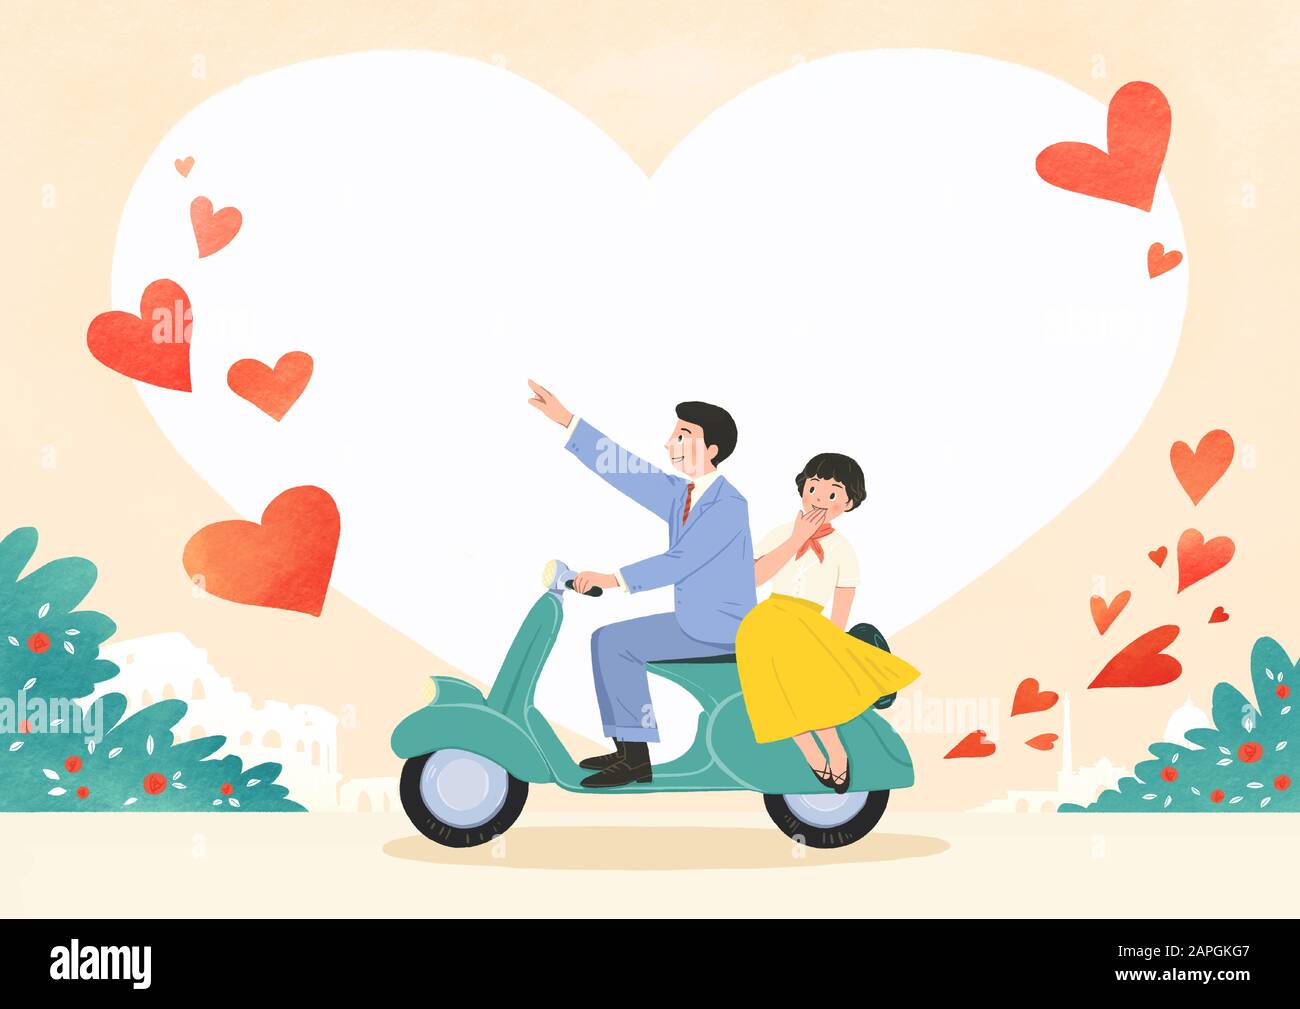 Romantic Relations, Loving happy couple illustration 002 Stock Vector